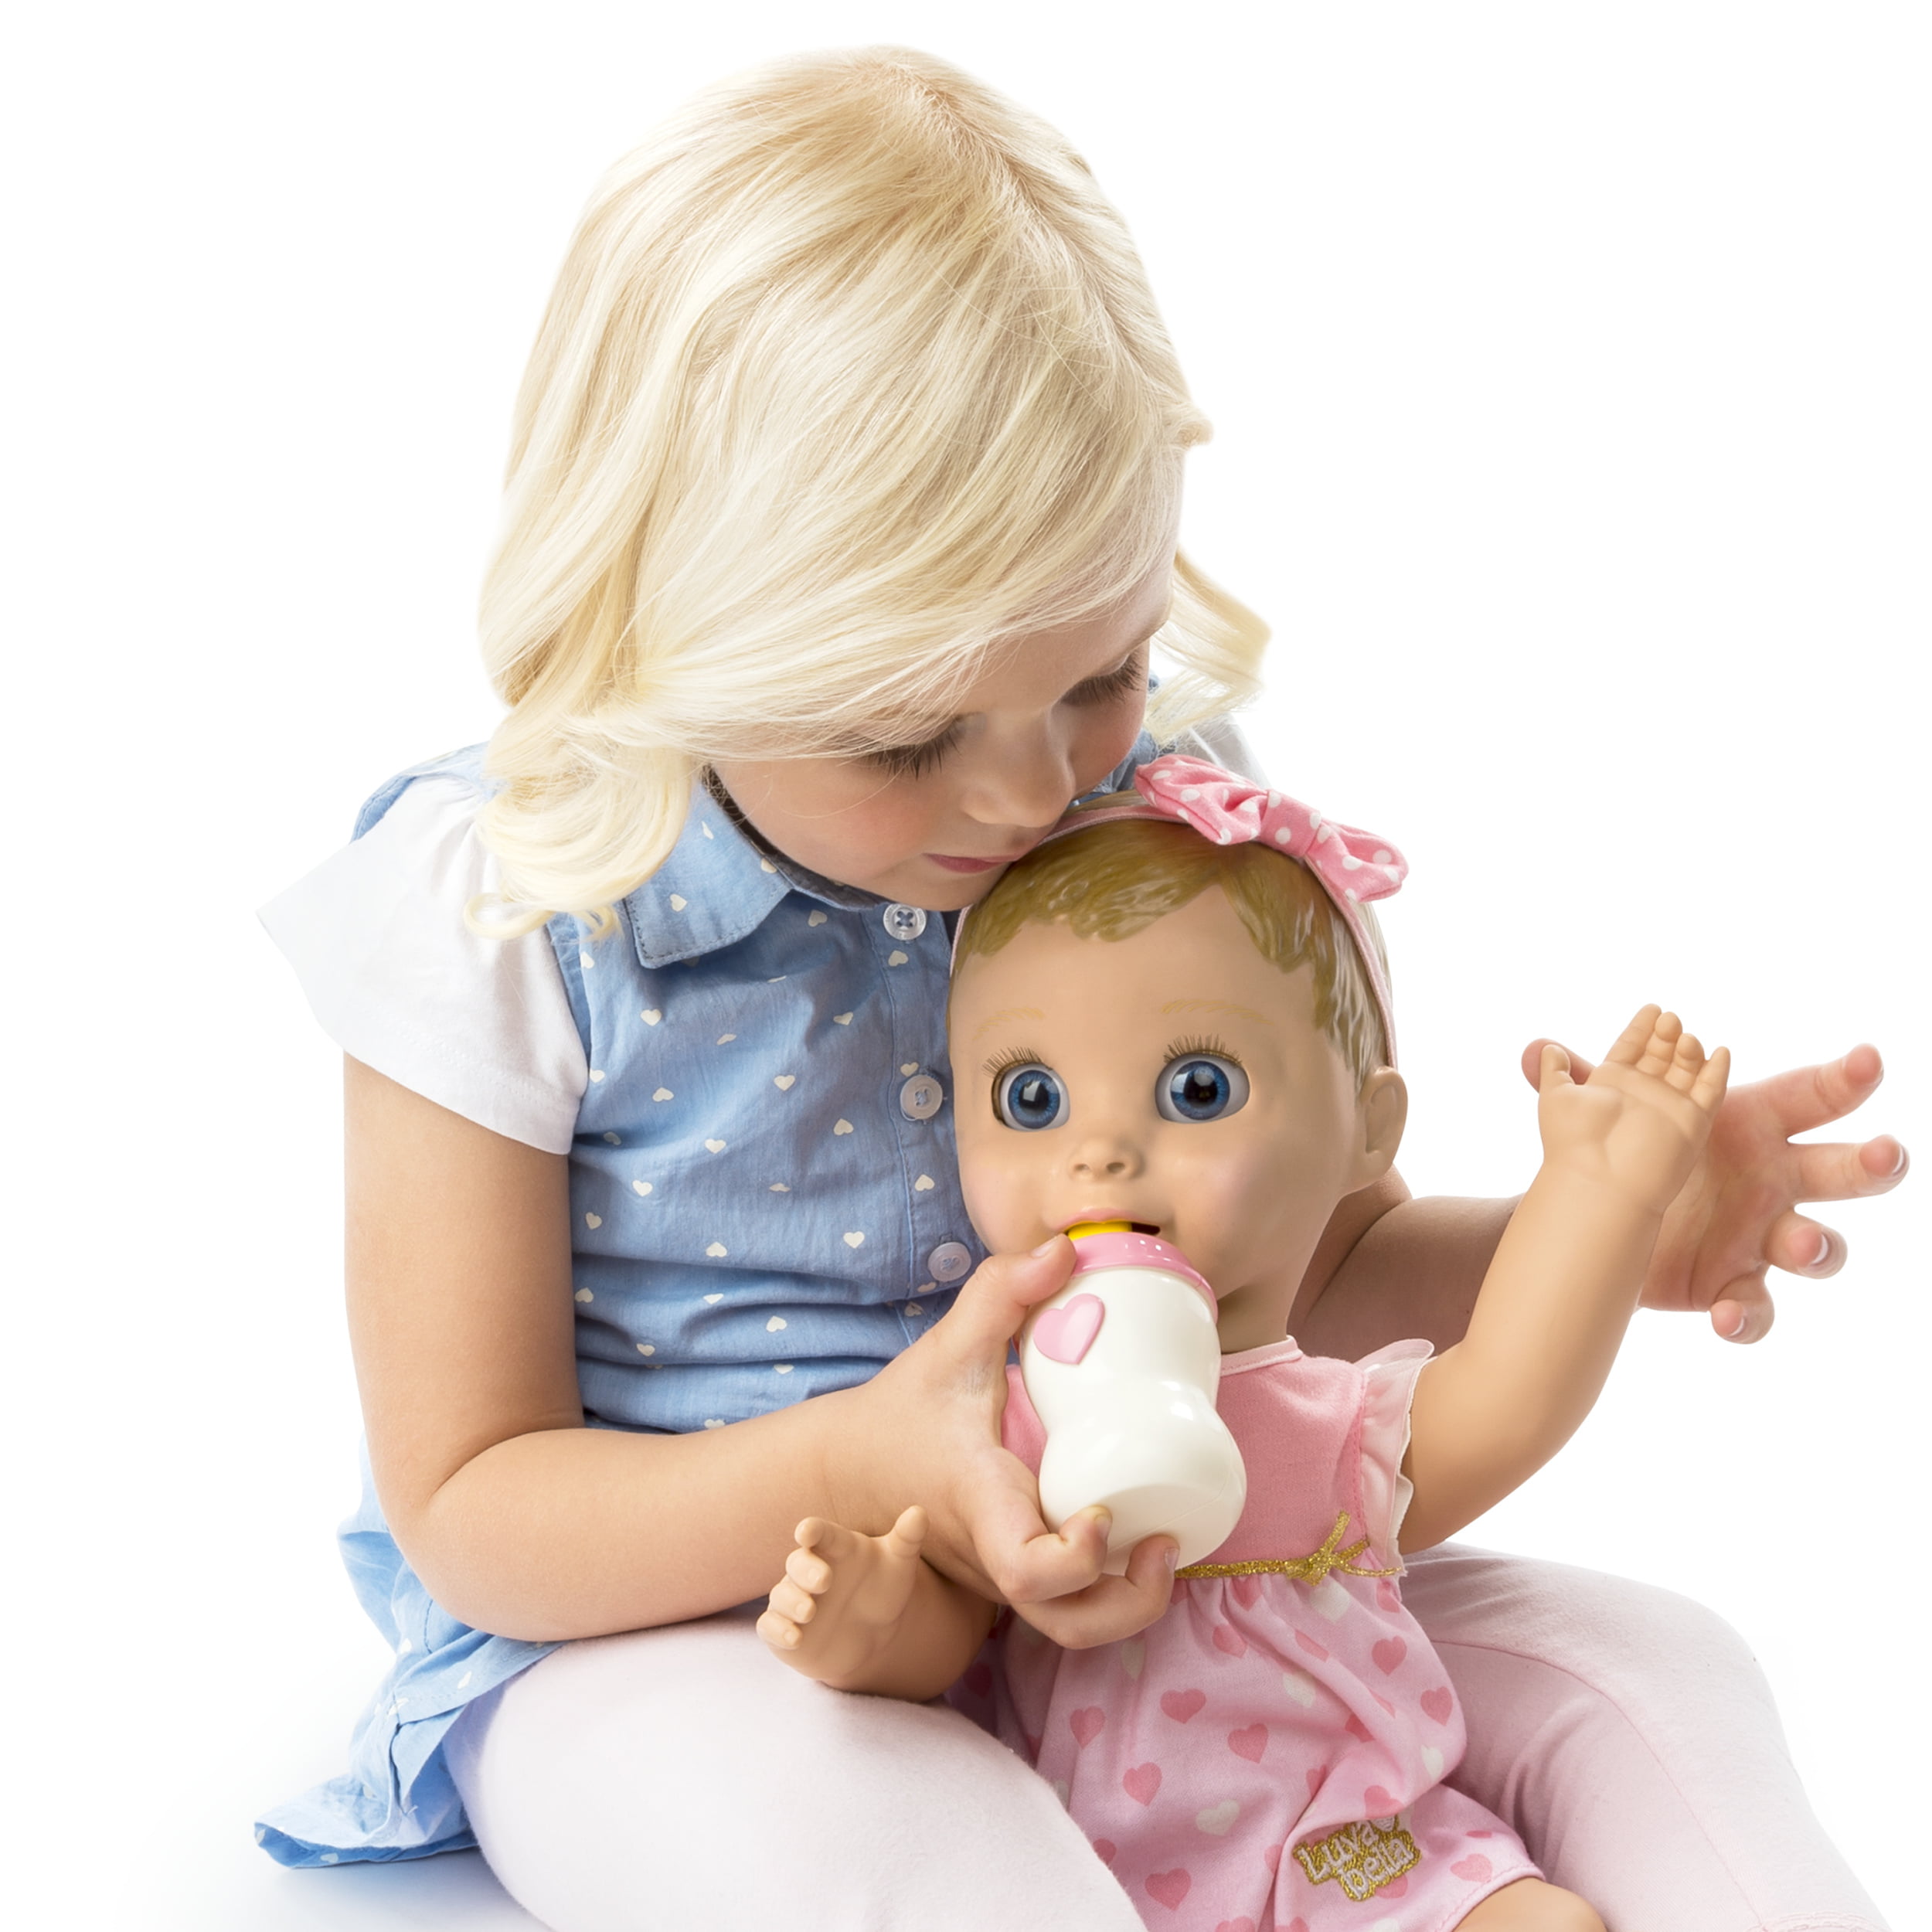 Куклы какие играют девочки. Кукла Беби бэби Лувабелла. Интерактивная кукла Spin Master Luvabella blonde hair. Интерактивная кукла Luvabella от Spin Master. Кукла Лувабелла детский мир.